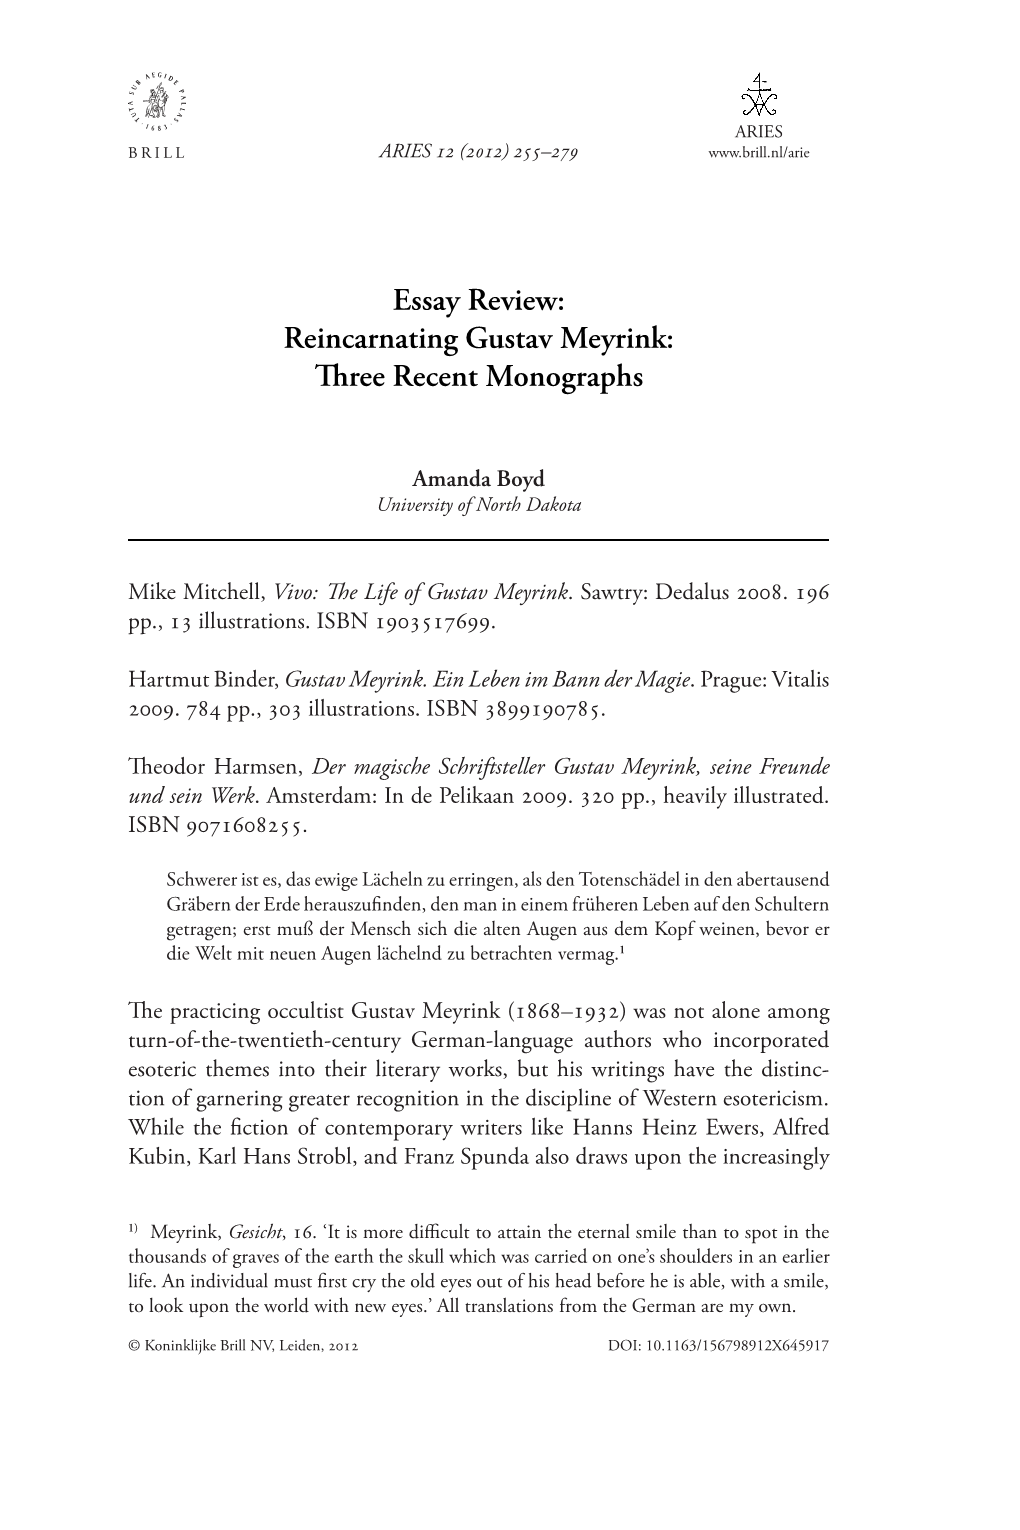 Essay Review: Reincarnating Gustav Meyrink: Three Recent Monographs